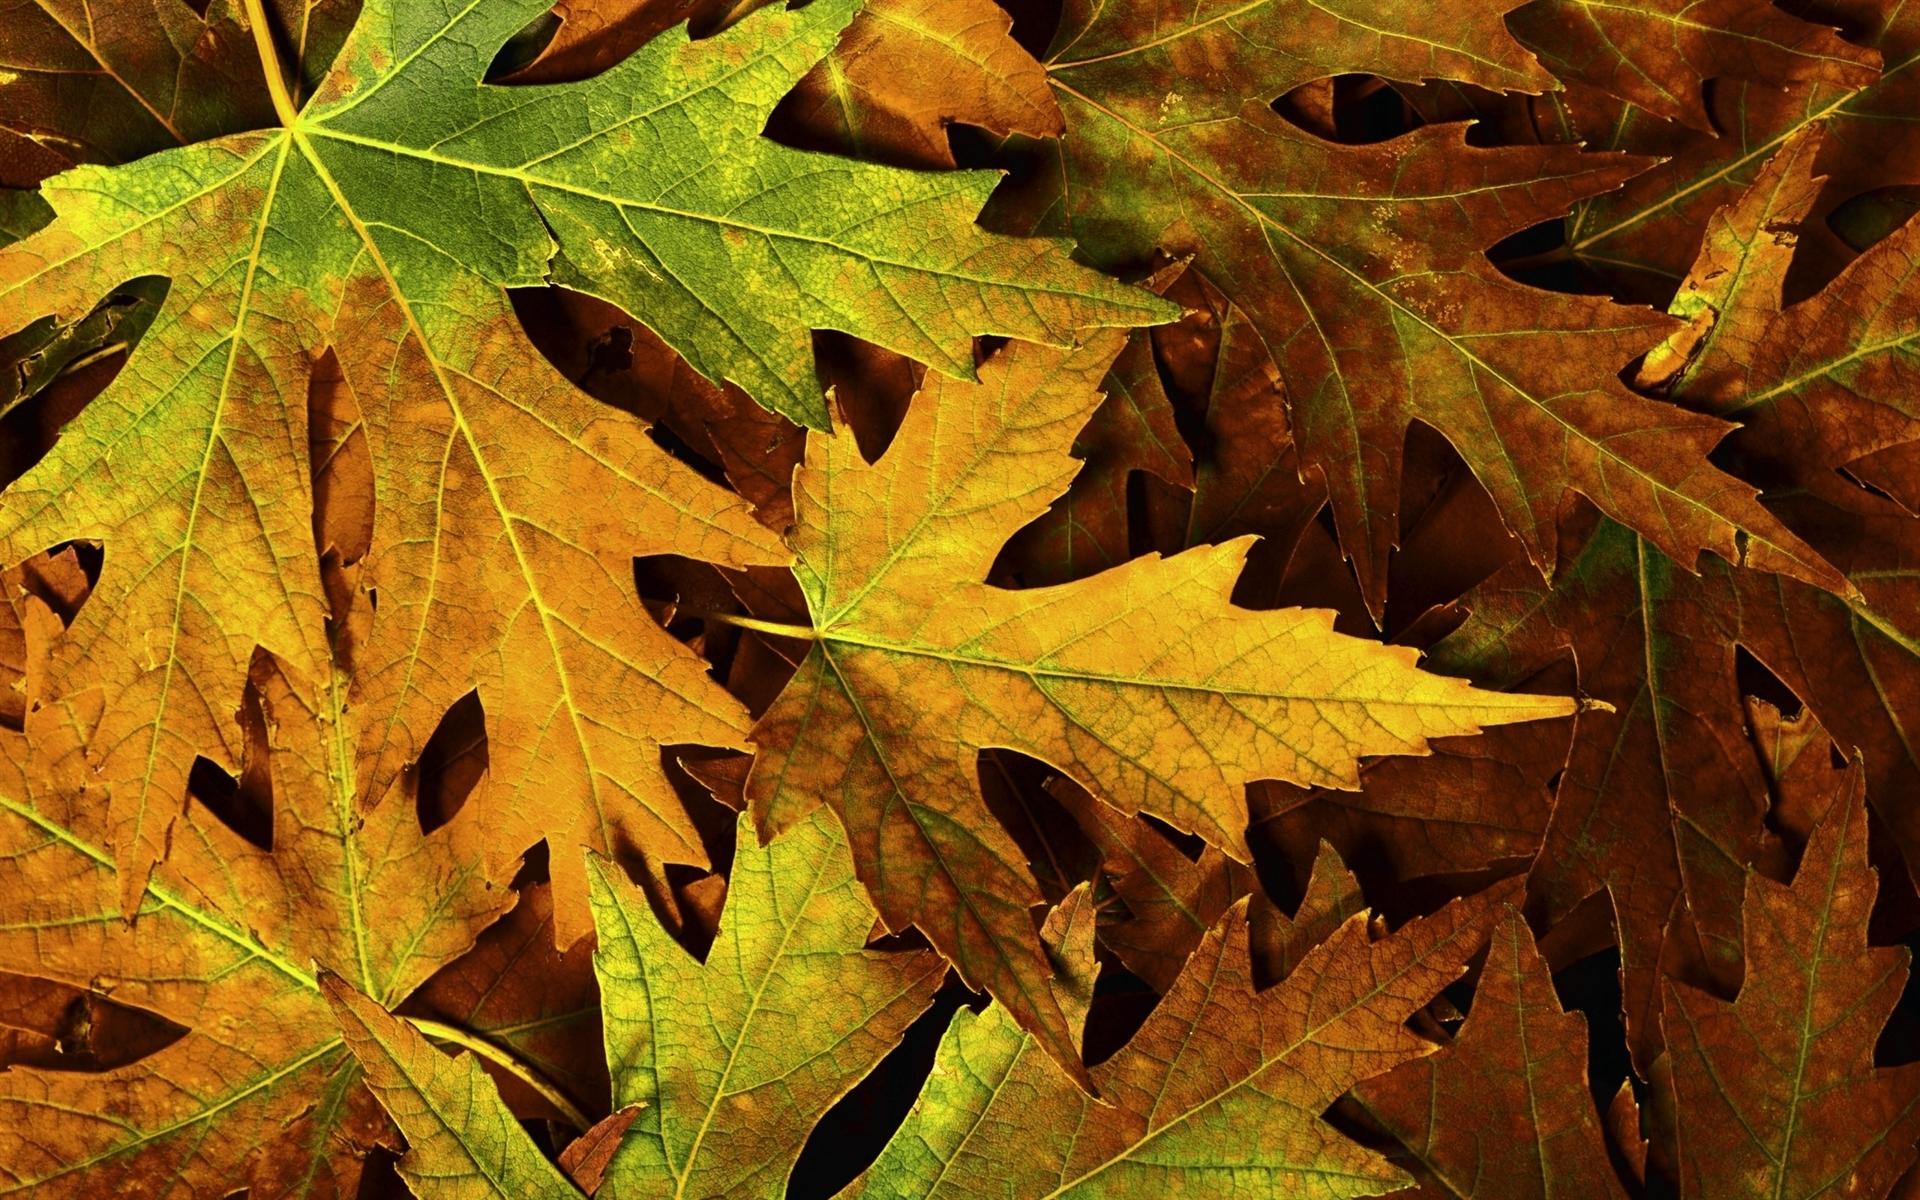 autumn fallen leaves background wallpaper desktop 1920x1200